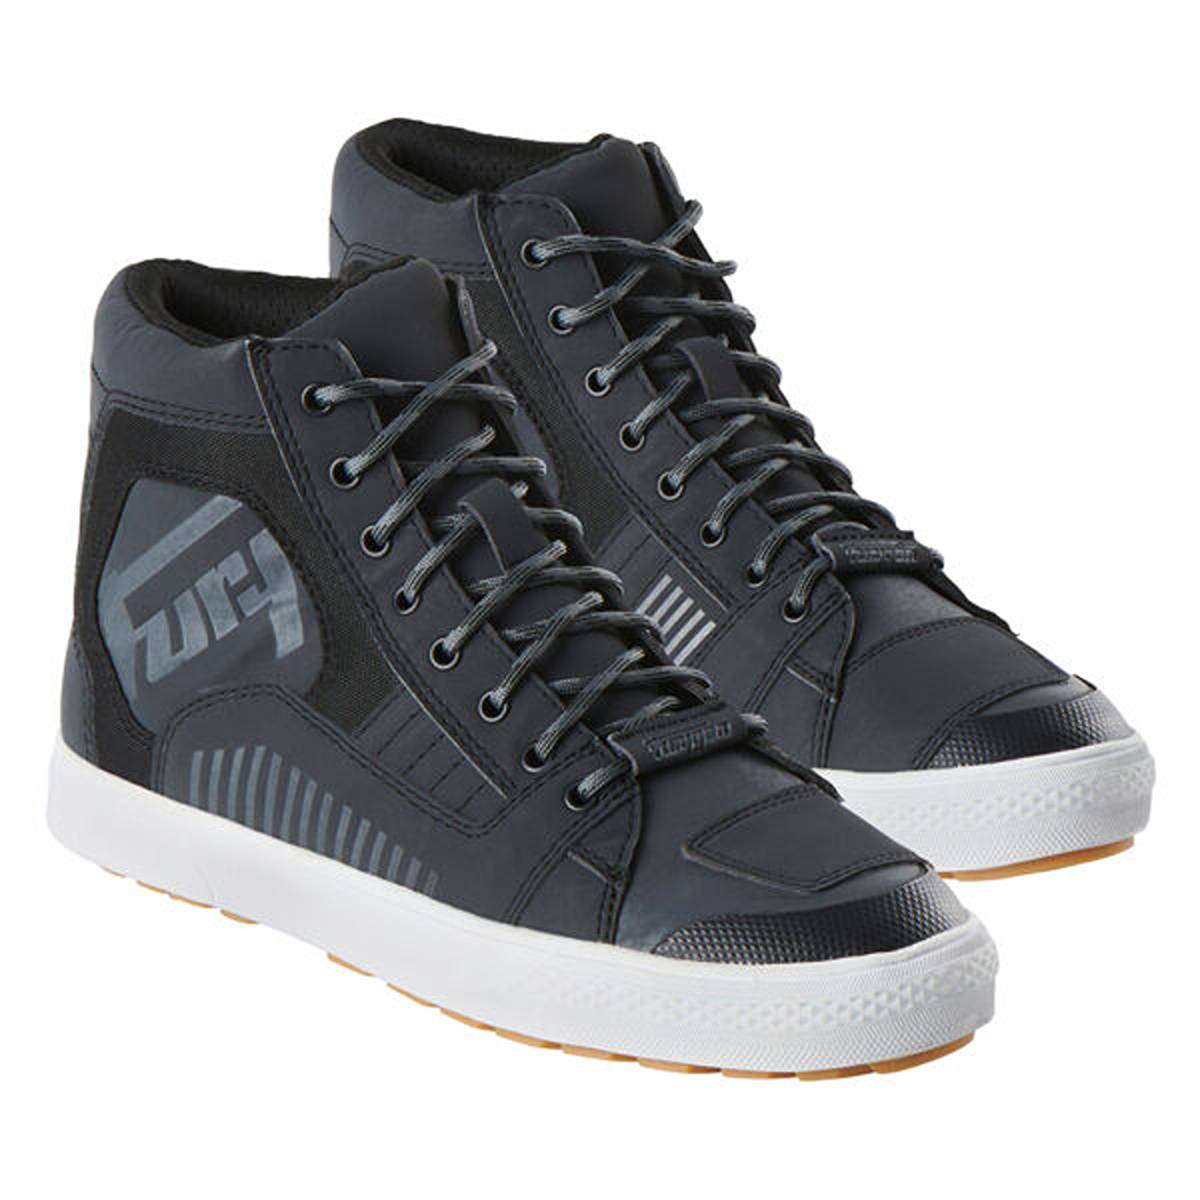 Image of Furygan Sacramento D30 Shoes Black Size 41 ID 3435980368265